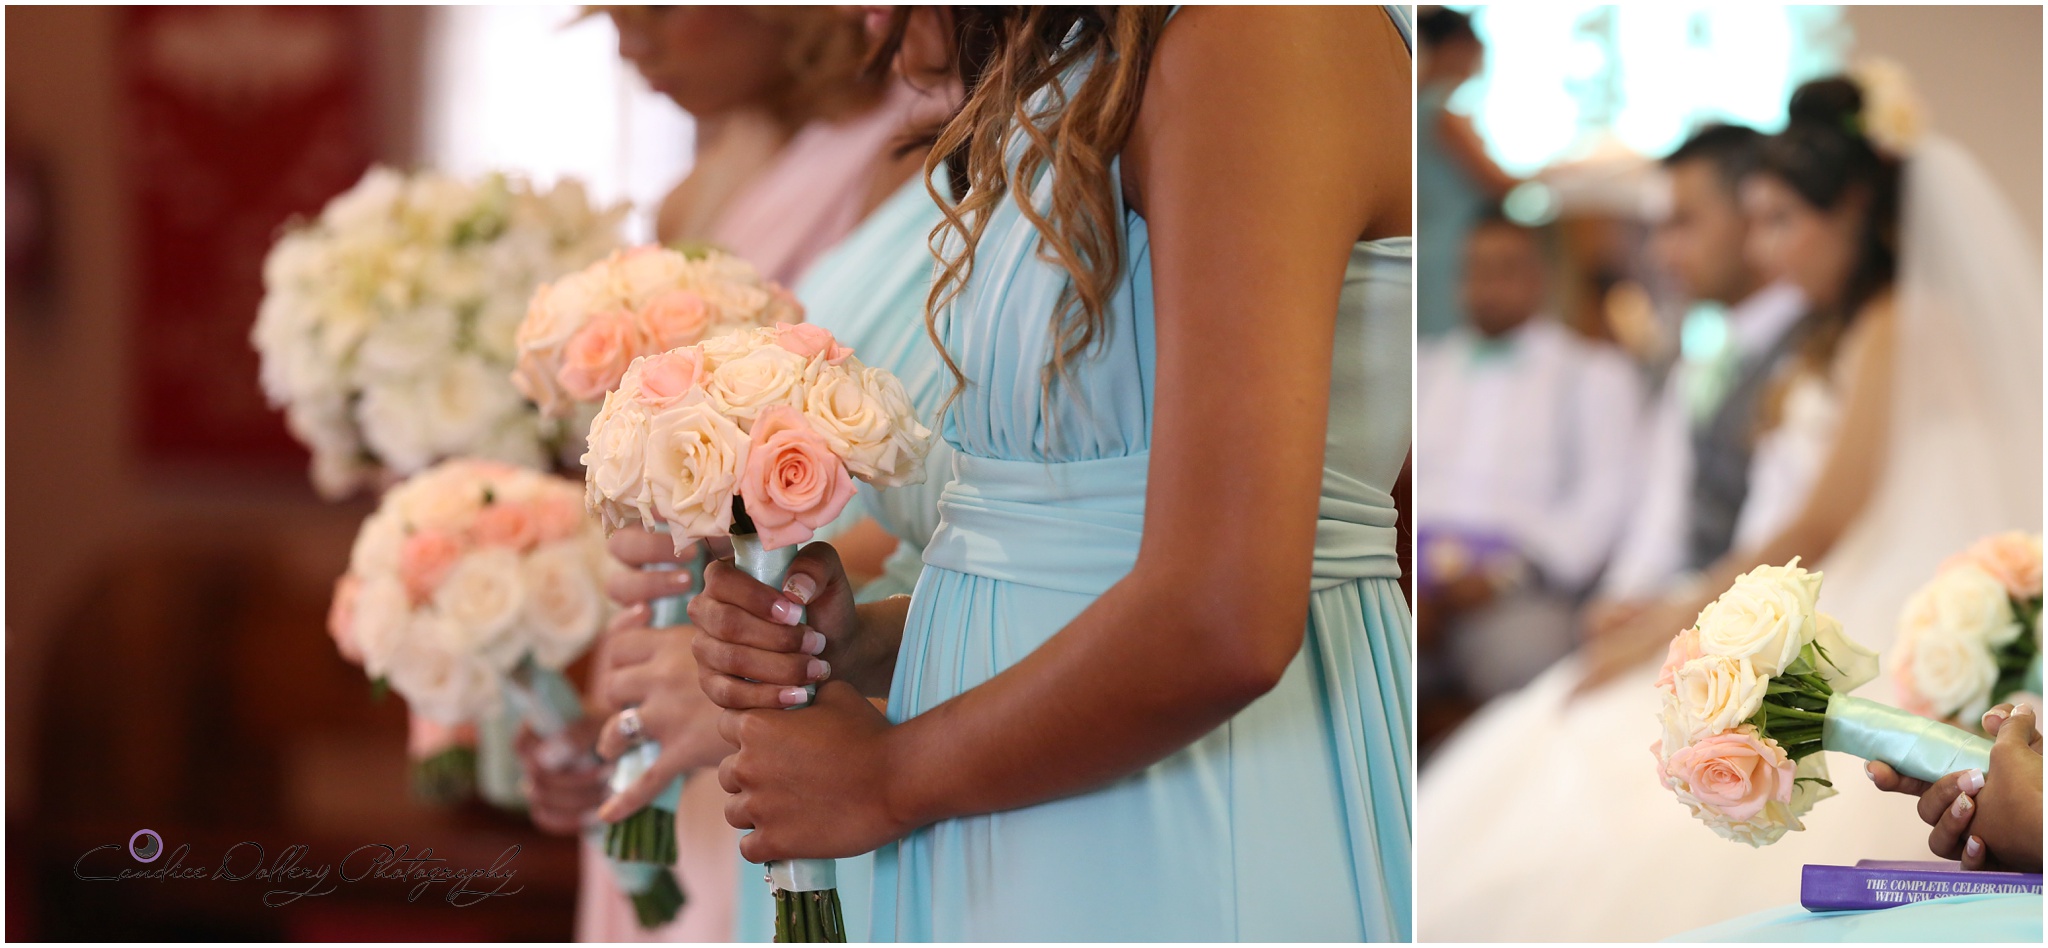 Paula & Jaycee's Wedding - Cypress Dale - Candice Dollery Photography_3035